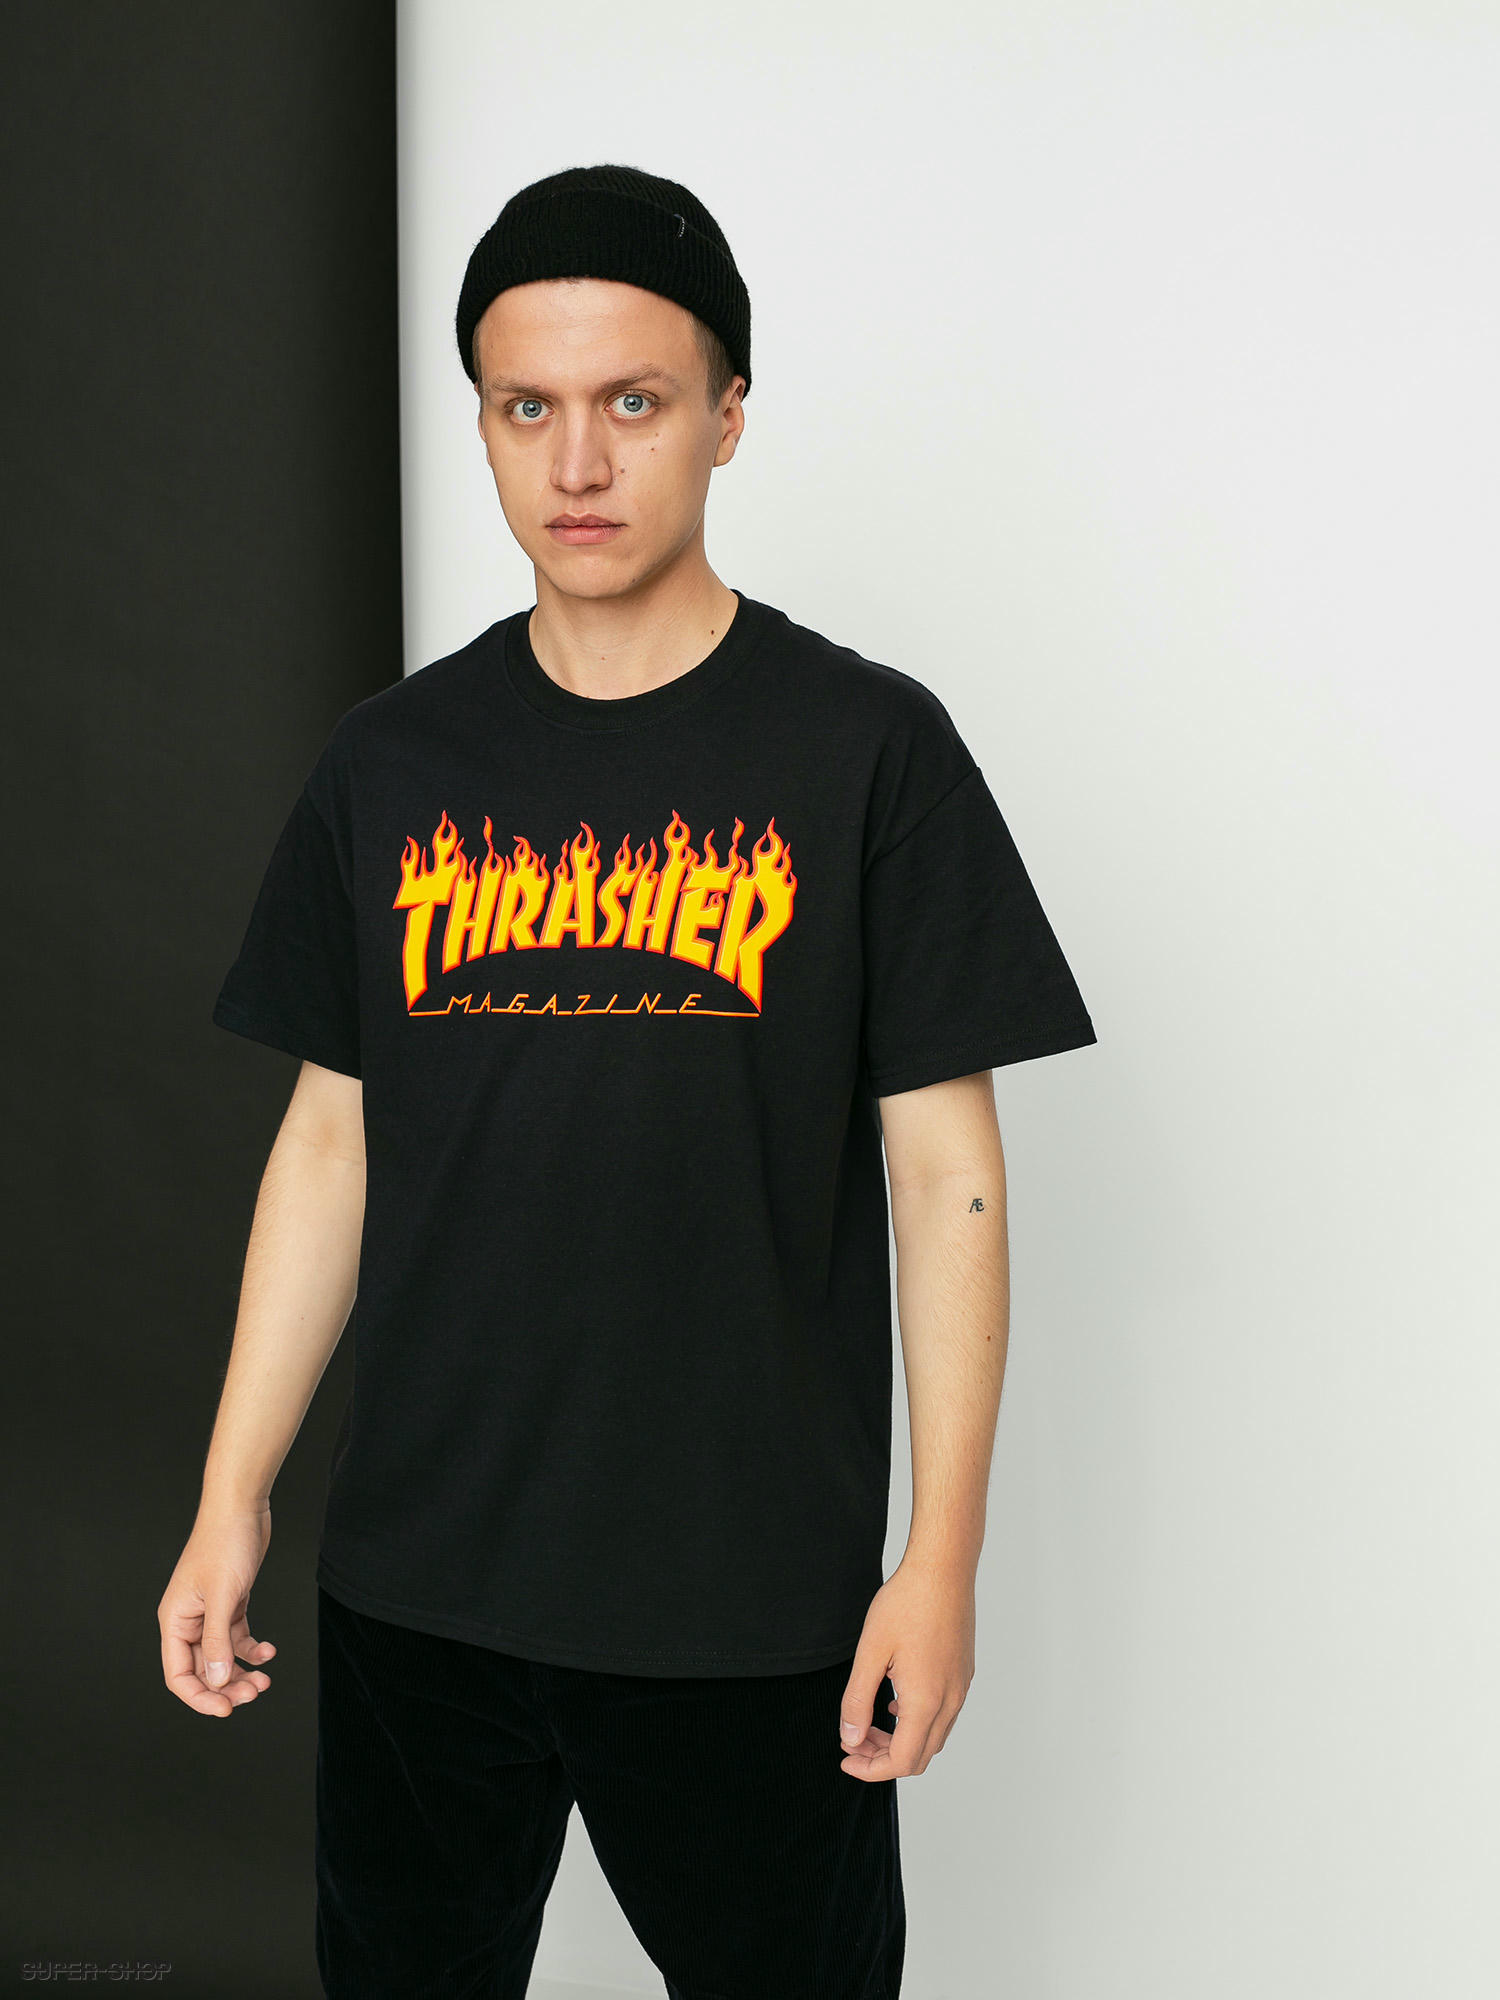 FREE SHIPPING! Mens L Black Thrasher Magazine Skategoat T-Shirt 